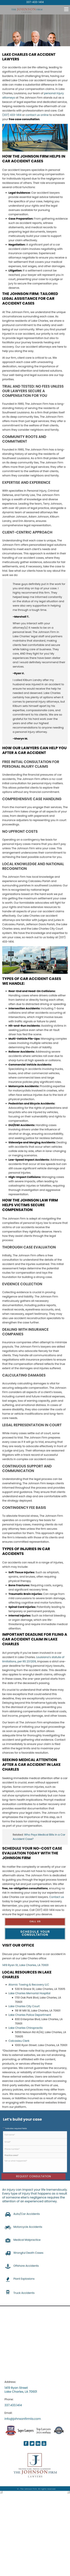 The Johnson Firm - Lake Charles LA Lawyers